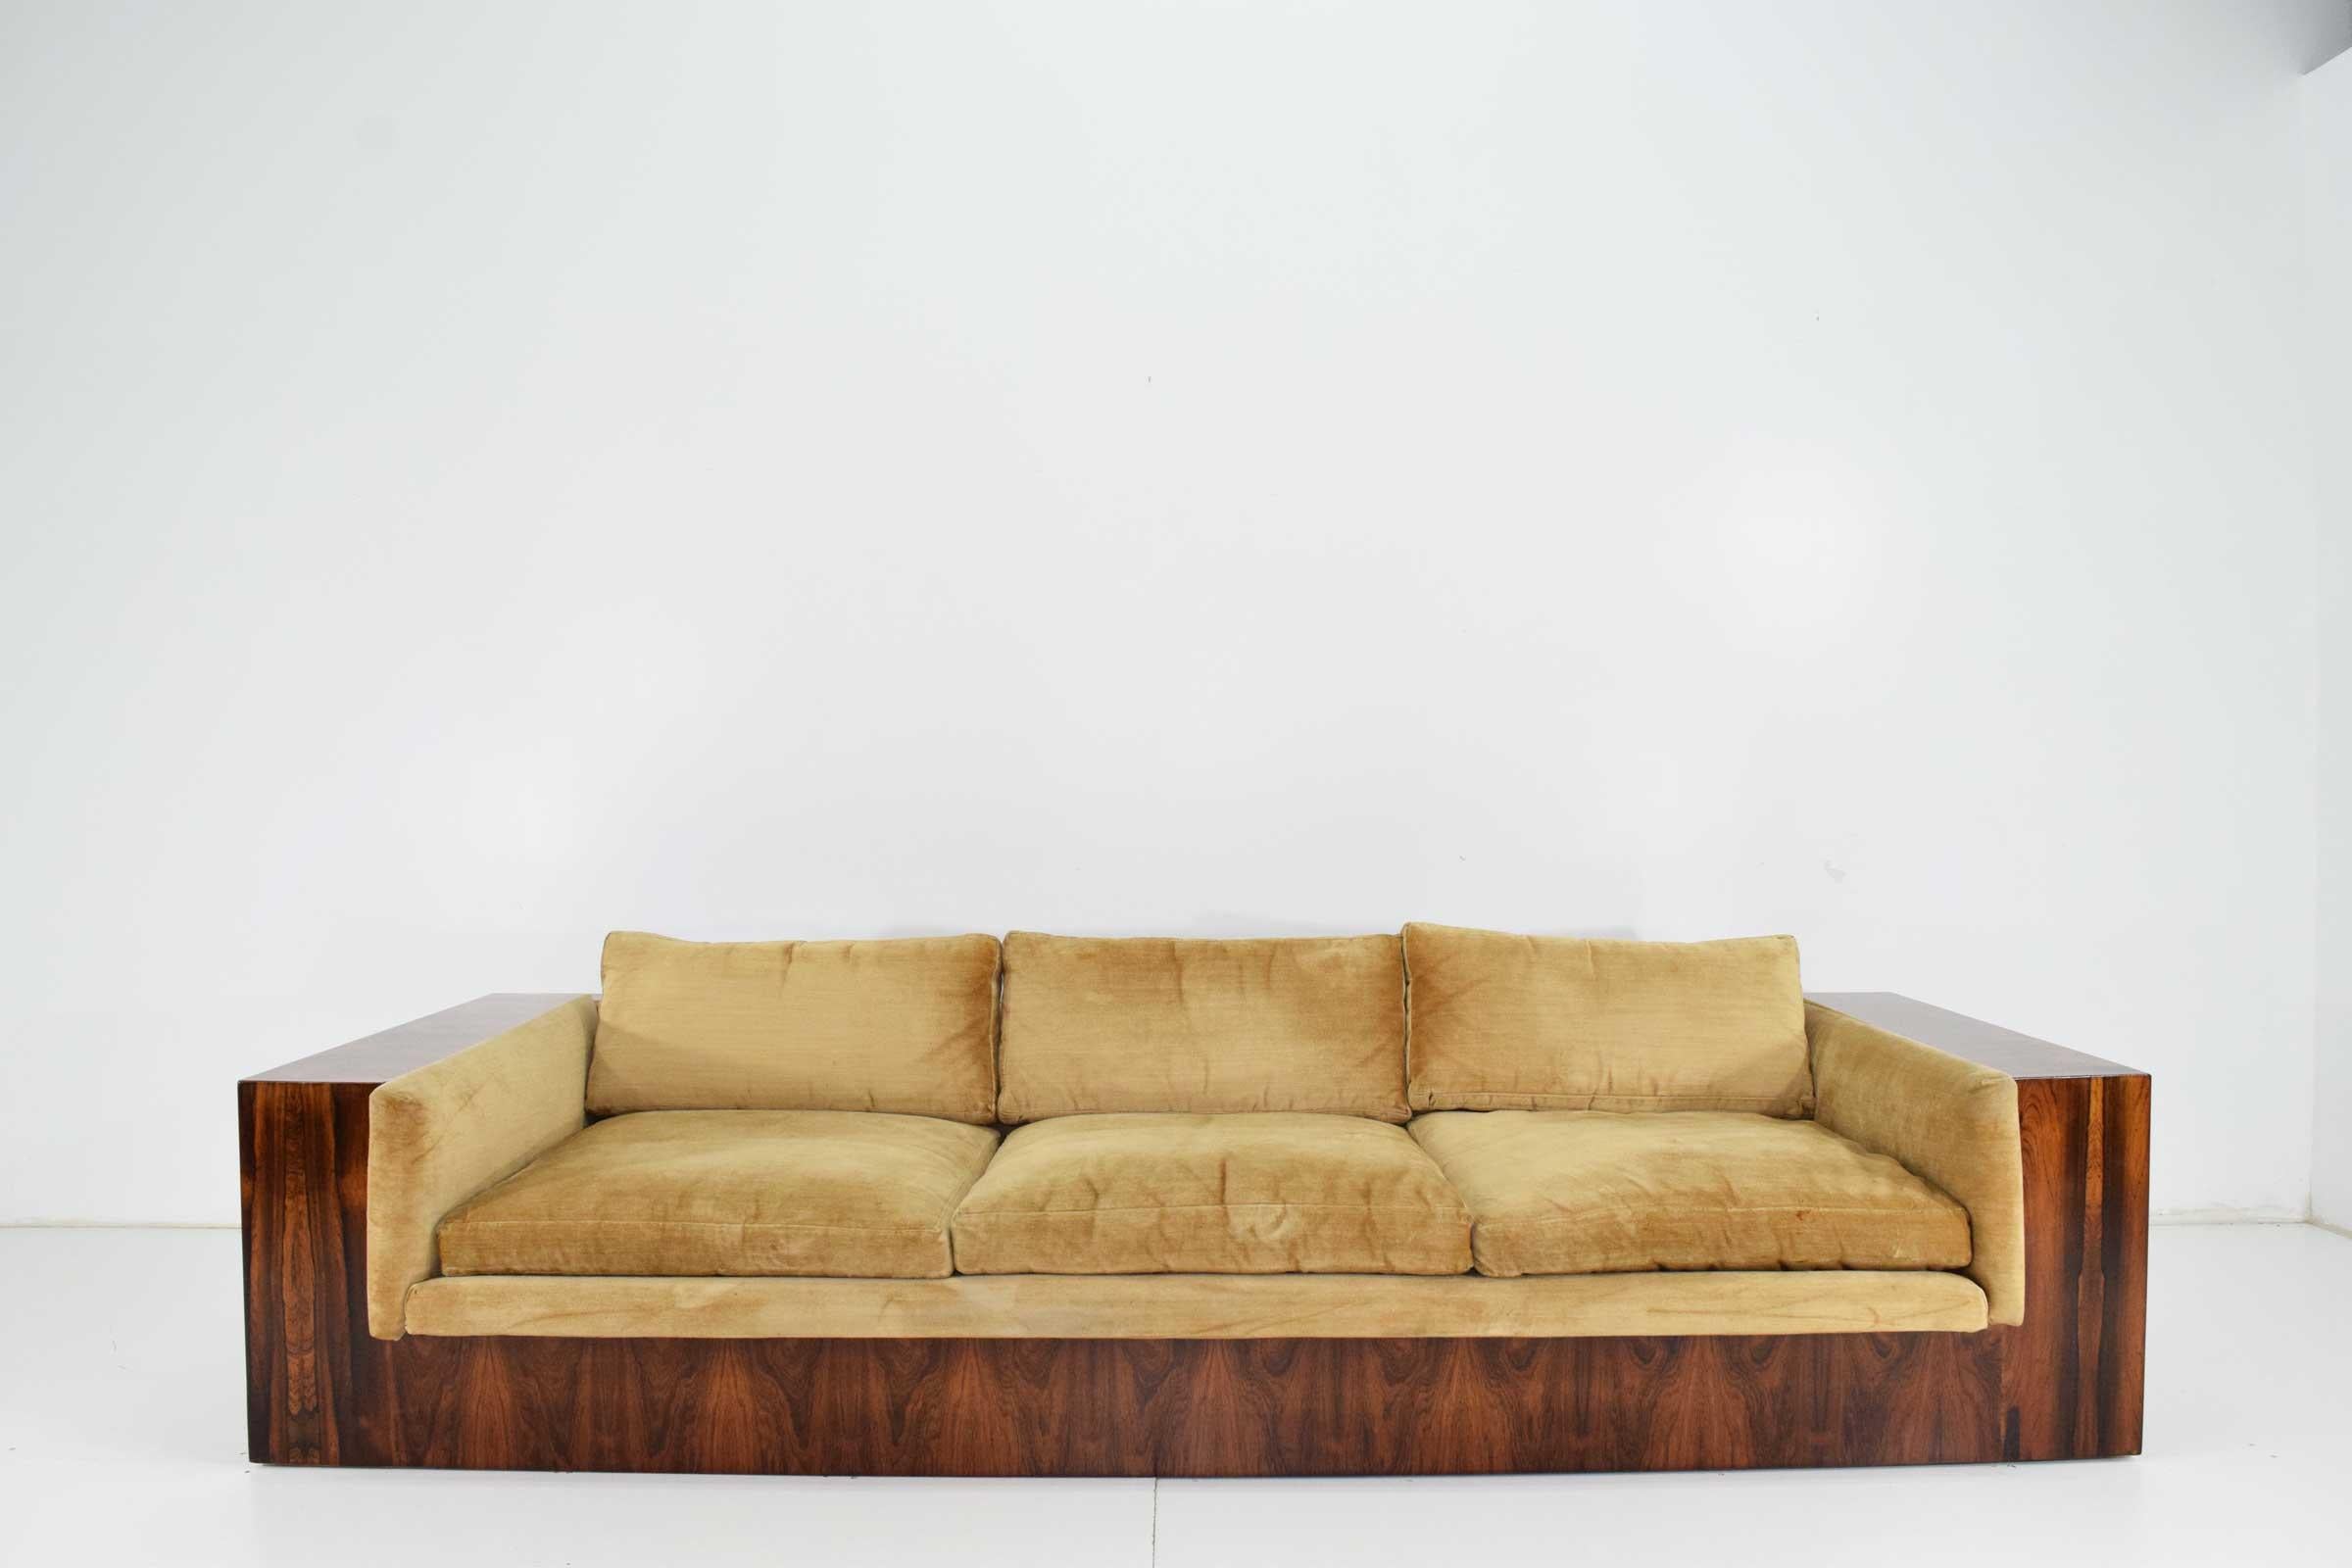 Upholstery Milo Baughman for Thayer Coggin Rosewood Case Sofa